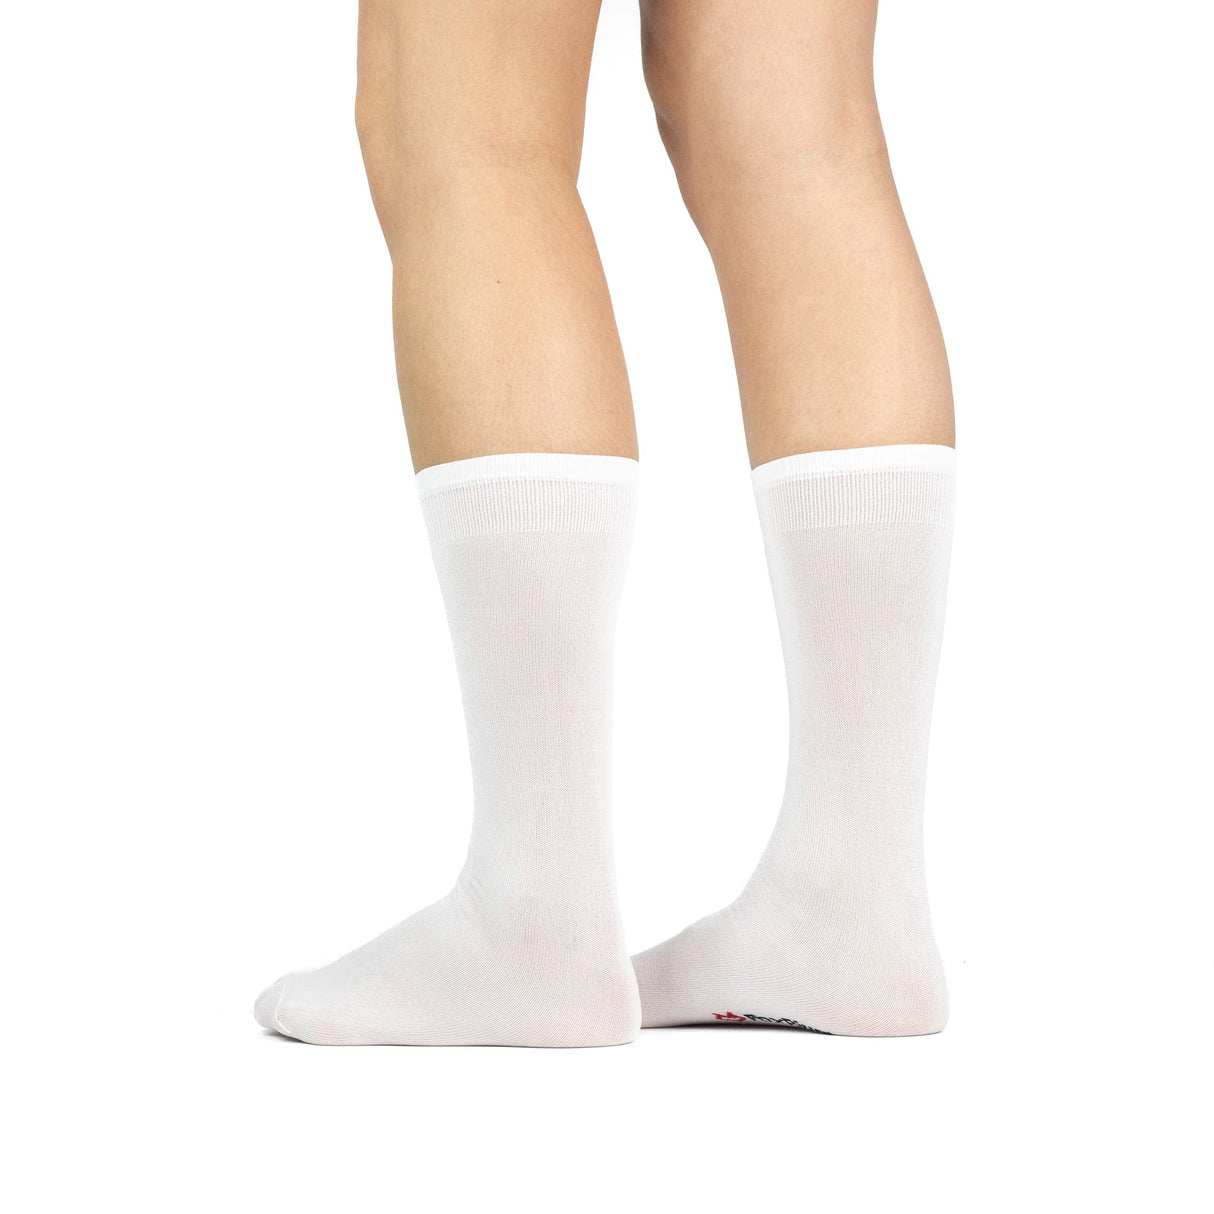 Fox River Wick Dry Sta-Dri Ultra Lightweight Tube Crew Socks  -  One Size Fits Most / White